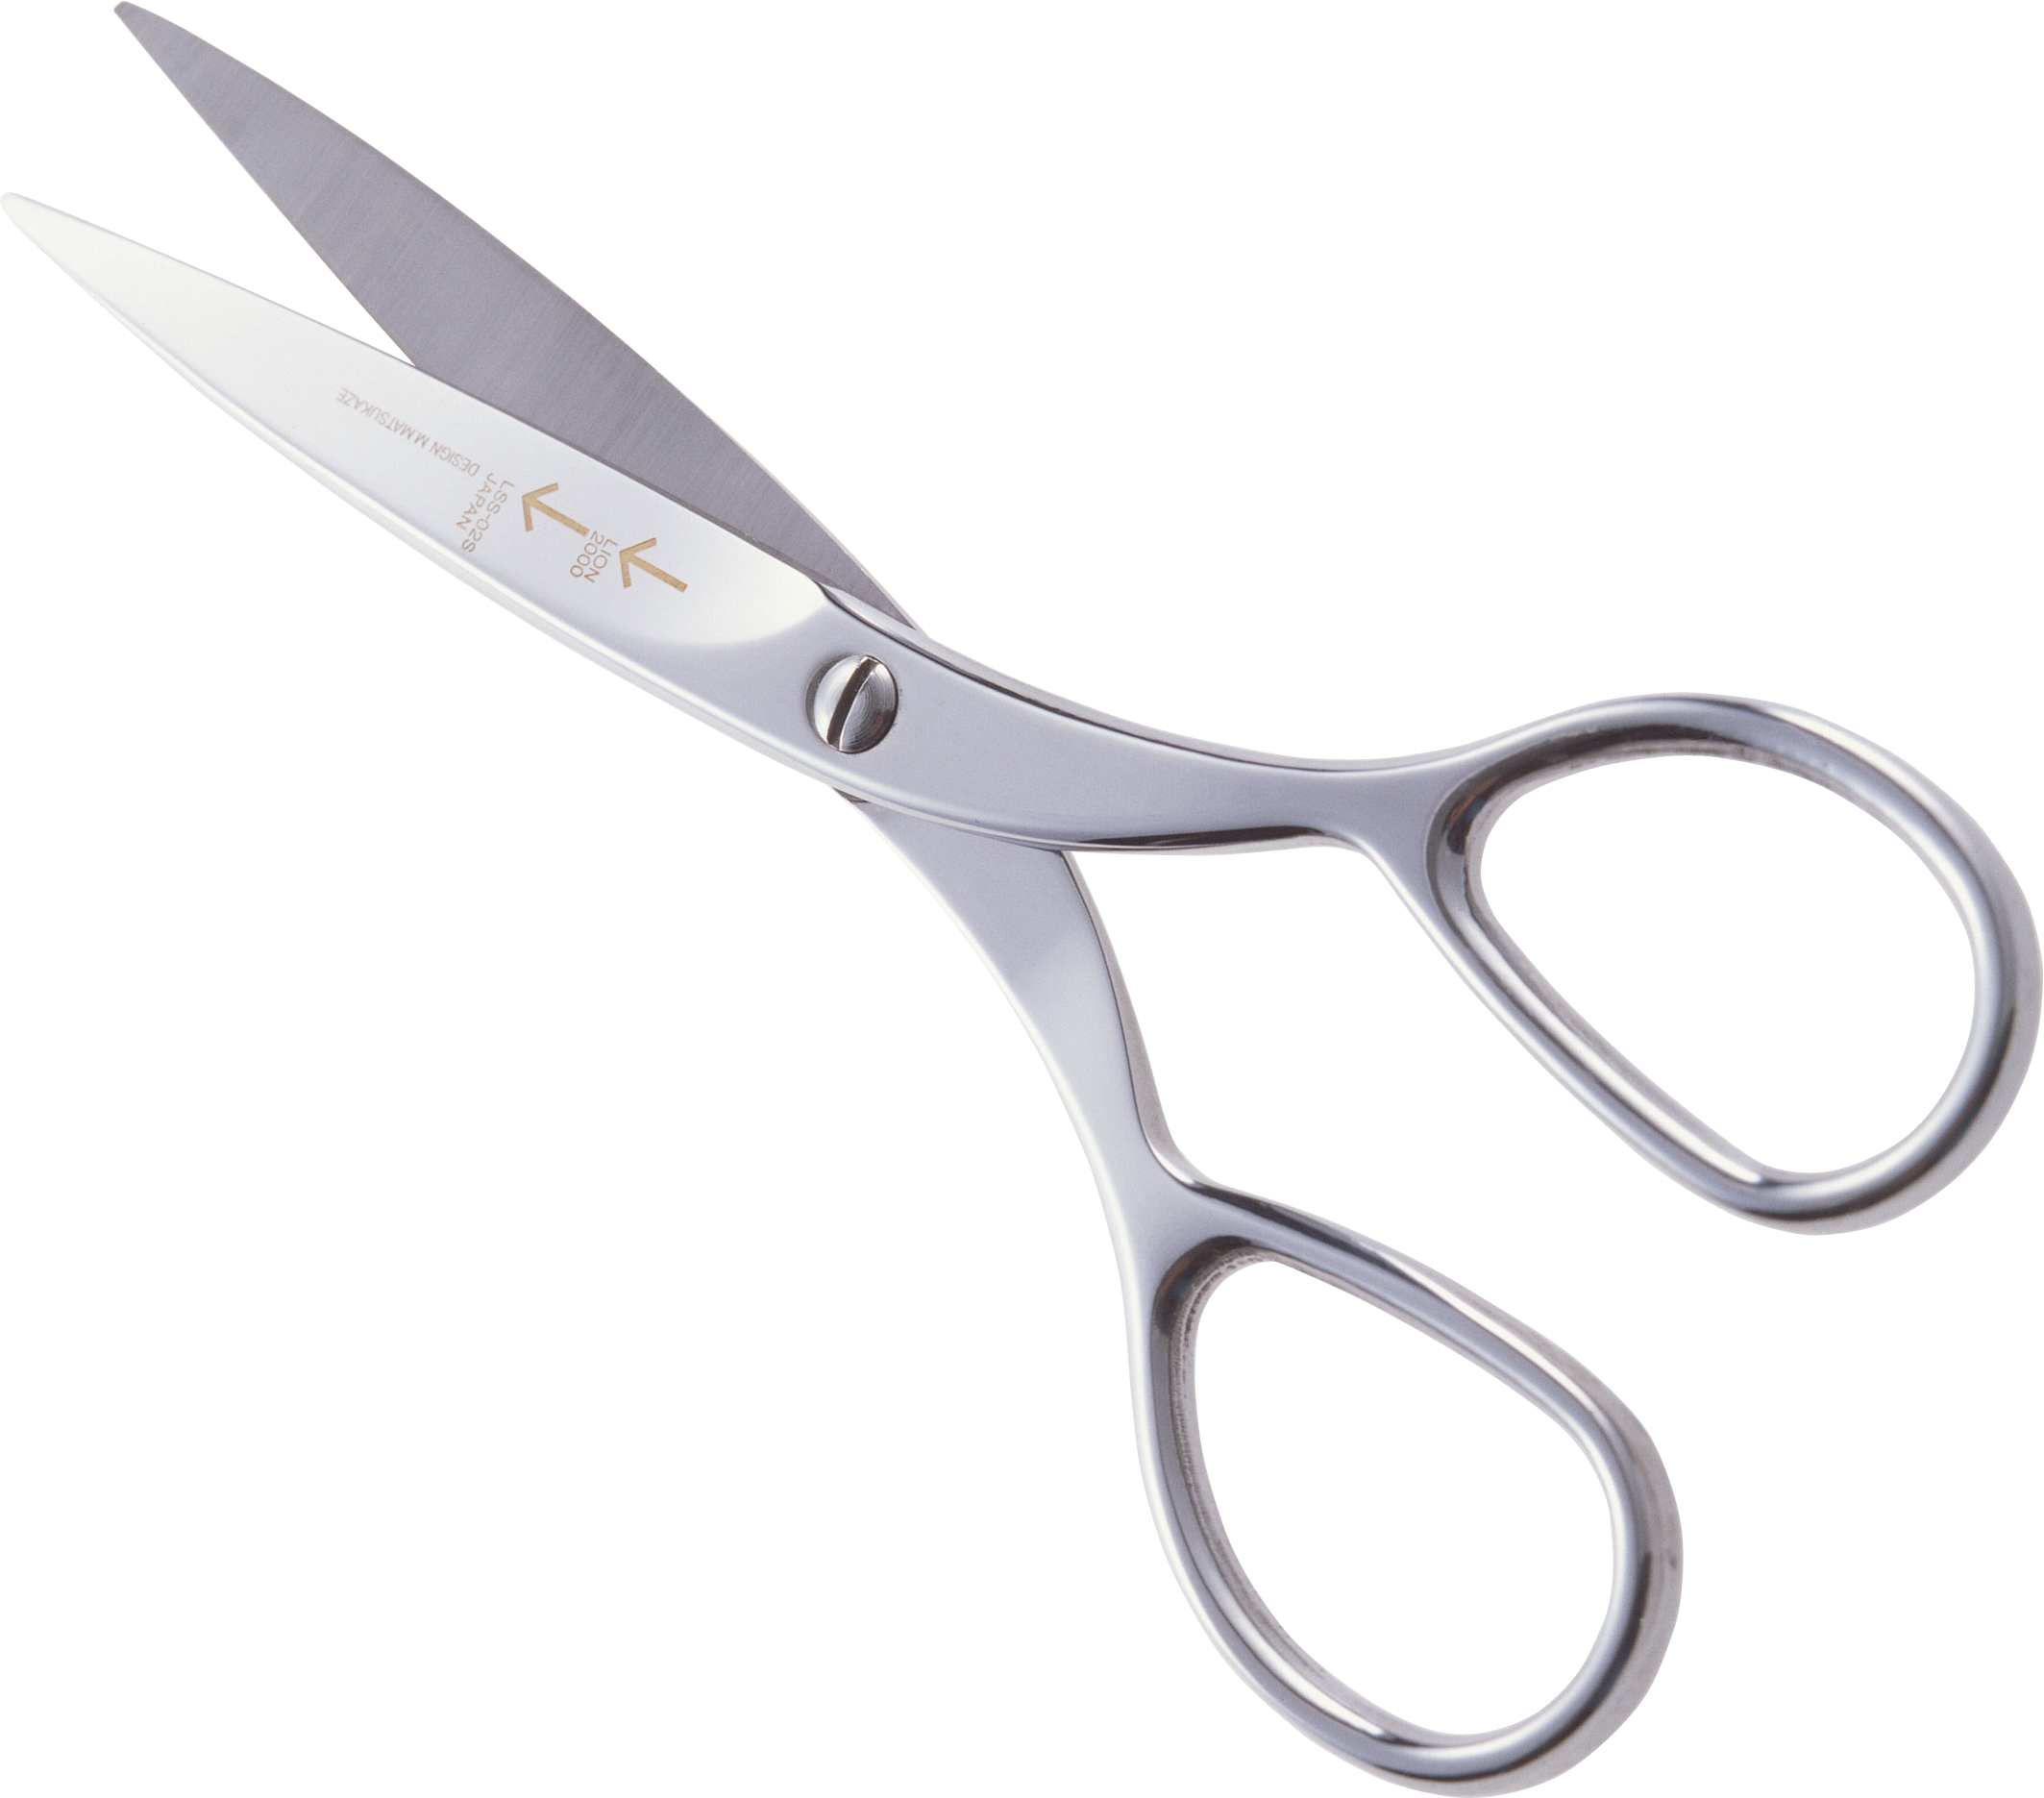 Hair Scissors Png Image - Scissor, Transparent background PNG HD thumbnail